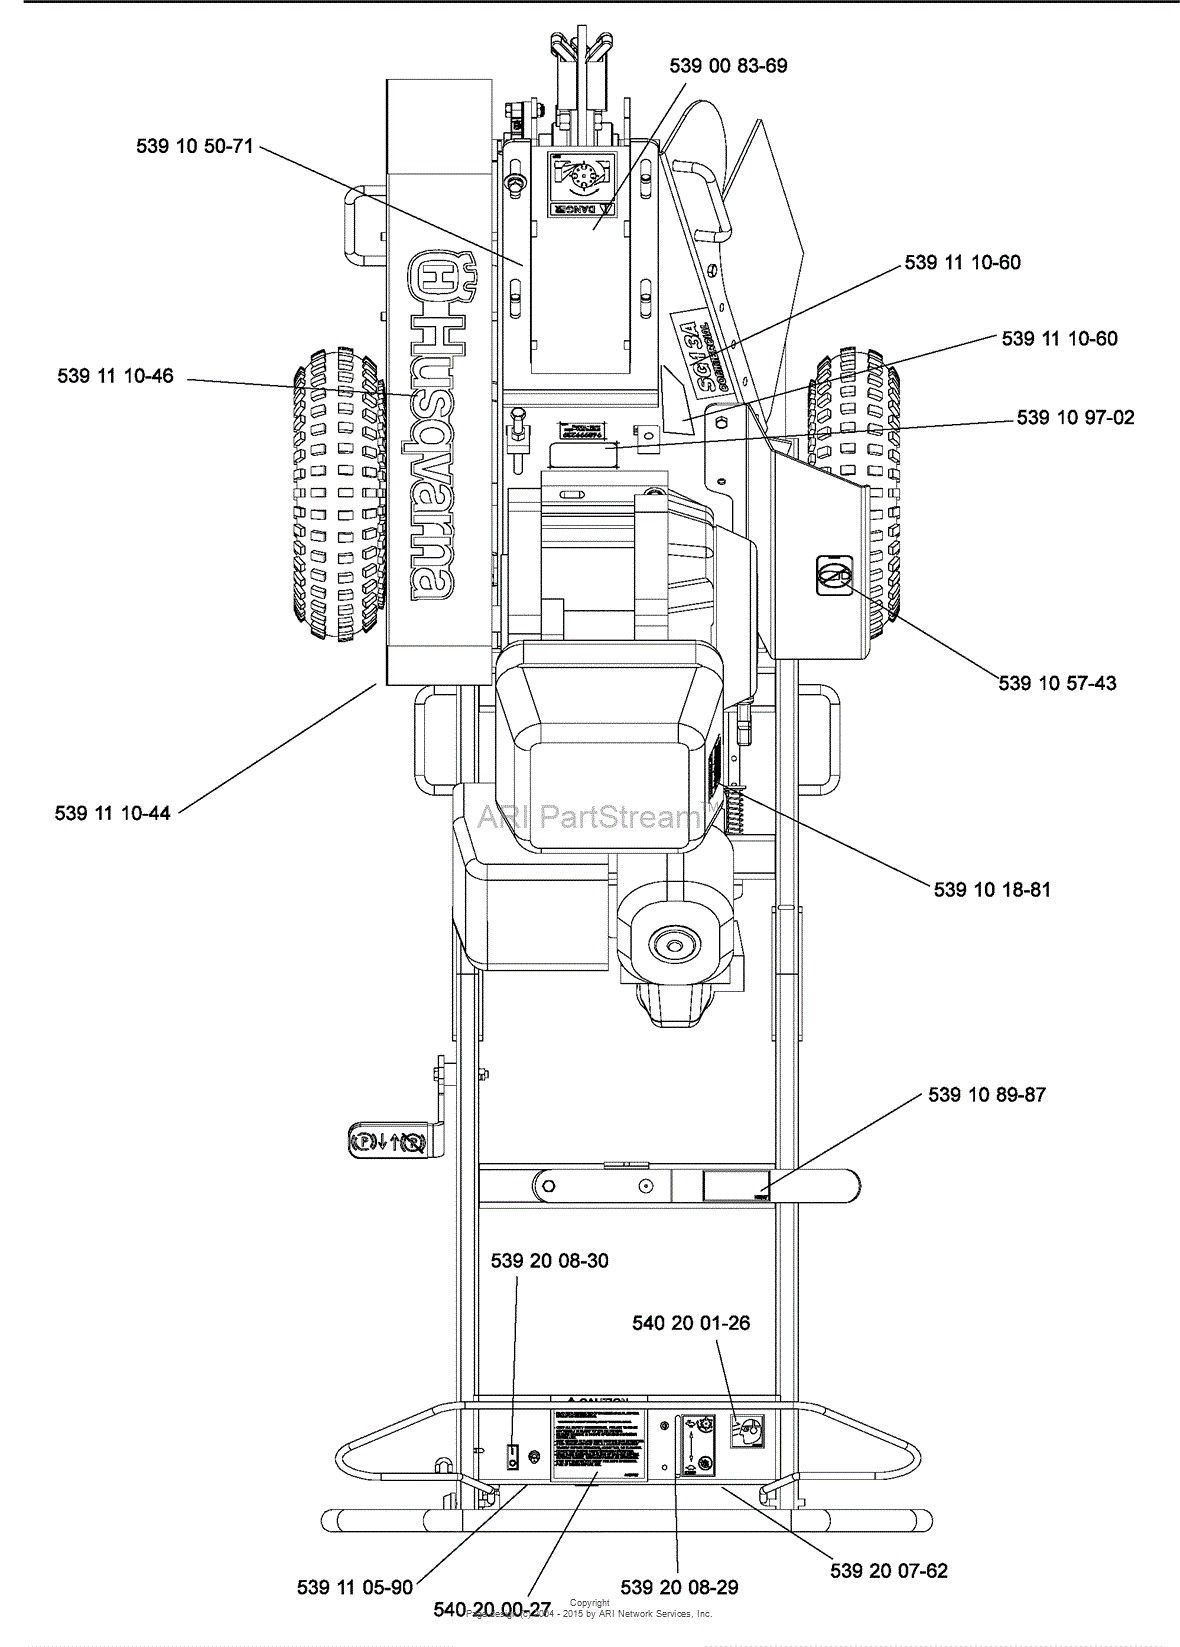 Marvellous Honda Gx610 Wiring Diagram s Best Image Schematics